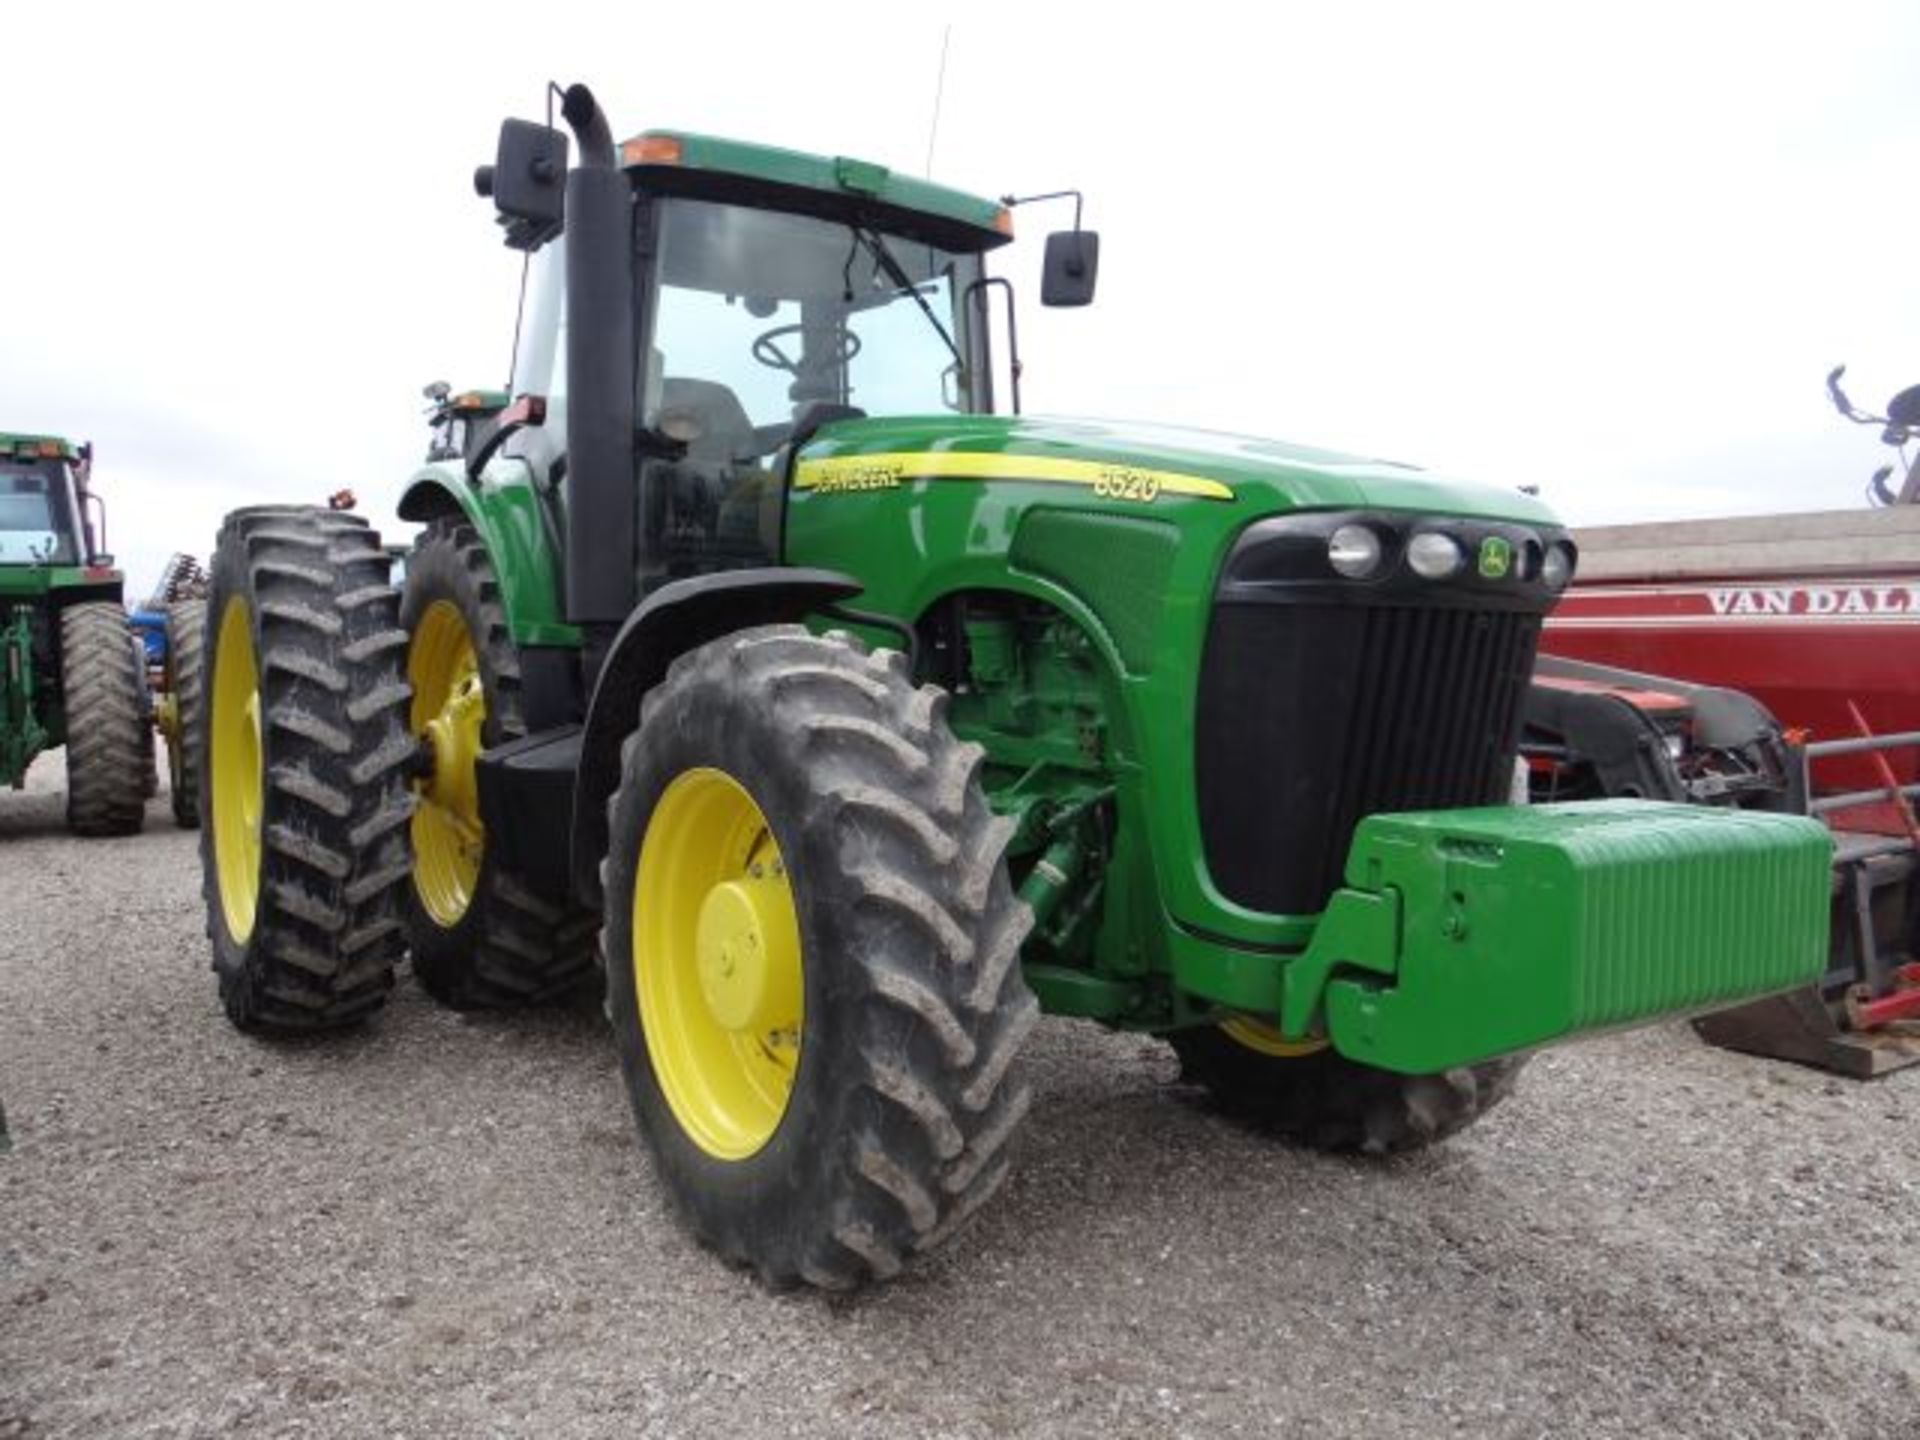 JD8520 Tractor, 2005 Powershift, ILS, 50" Tires, Wt Kit, 4410 hrs